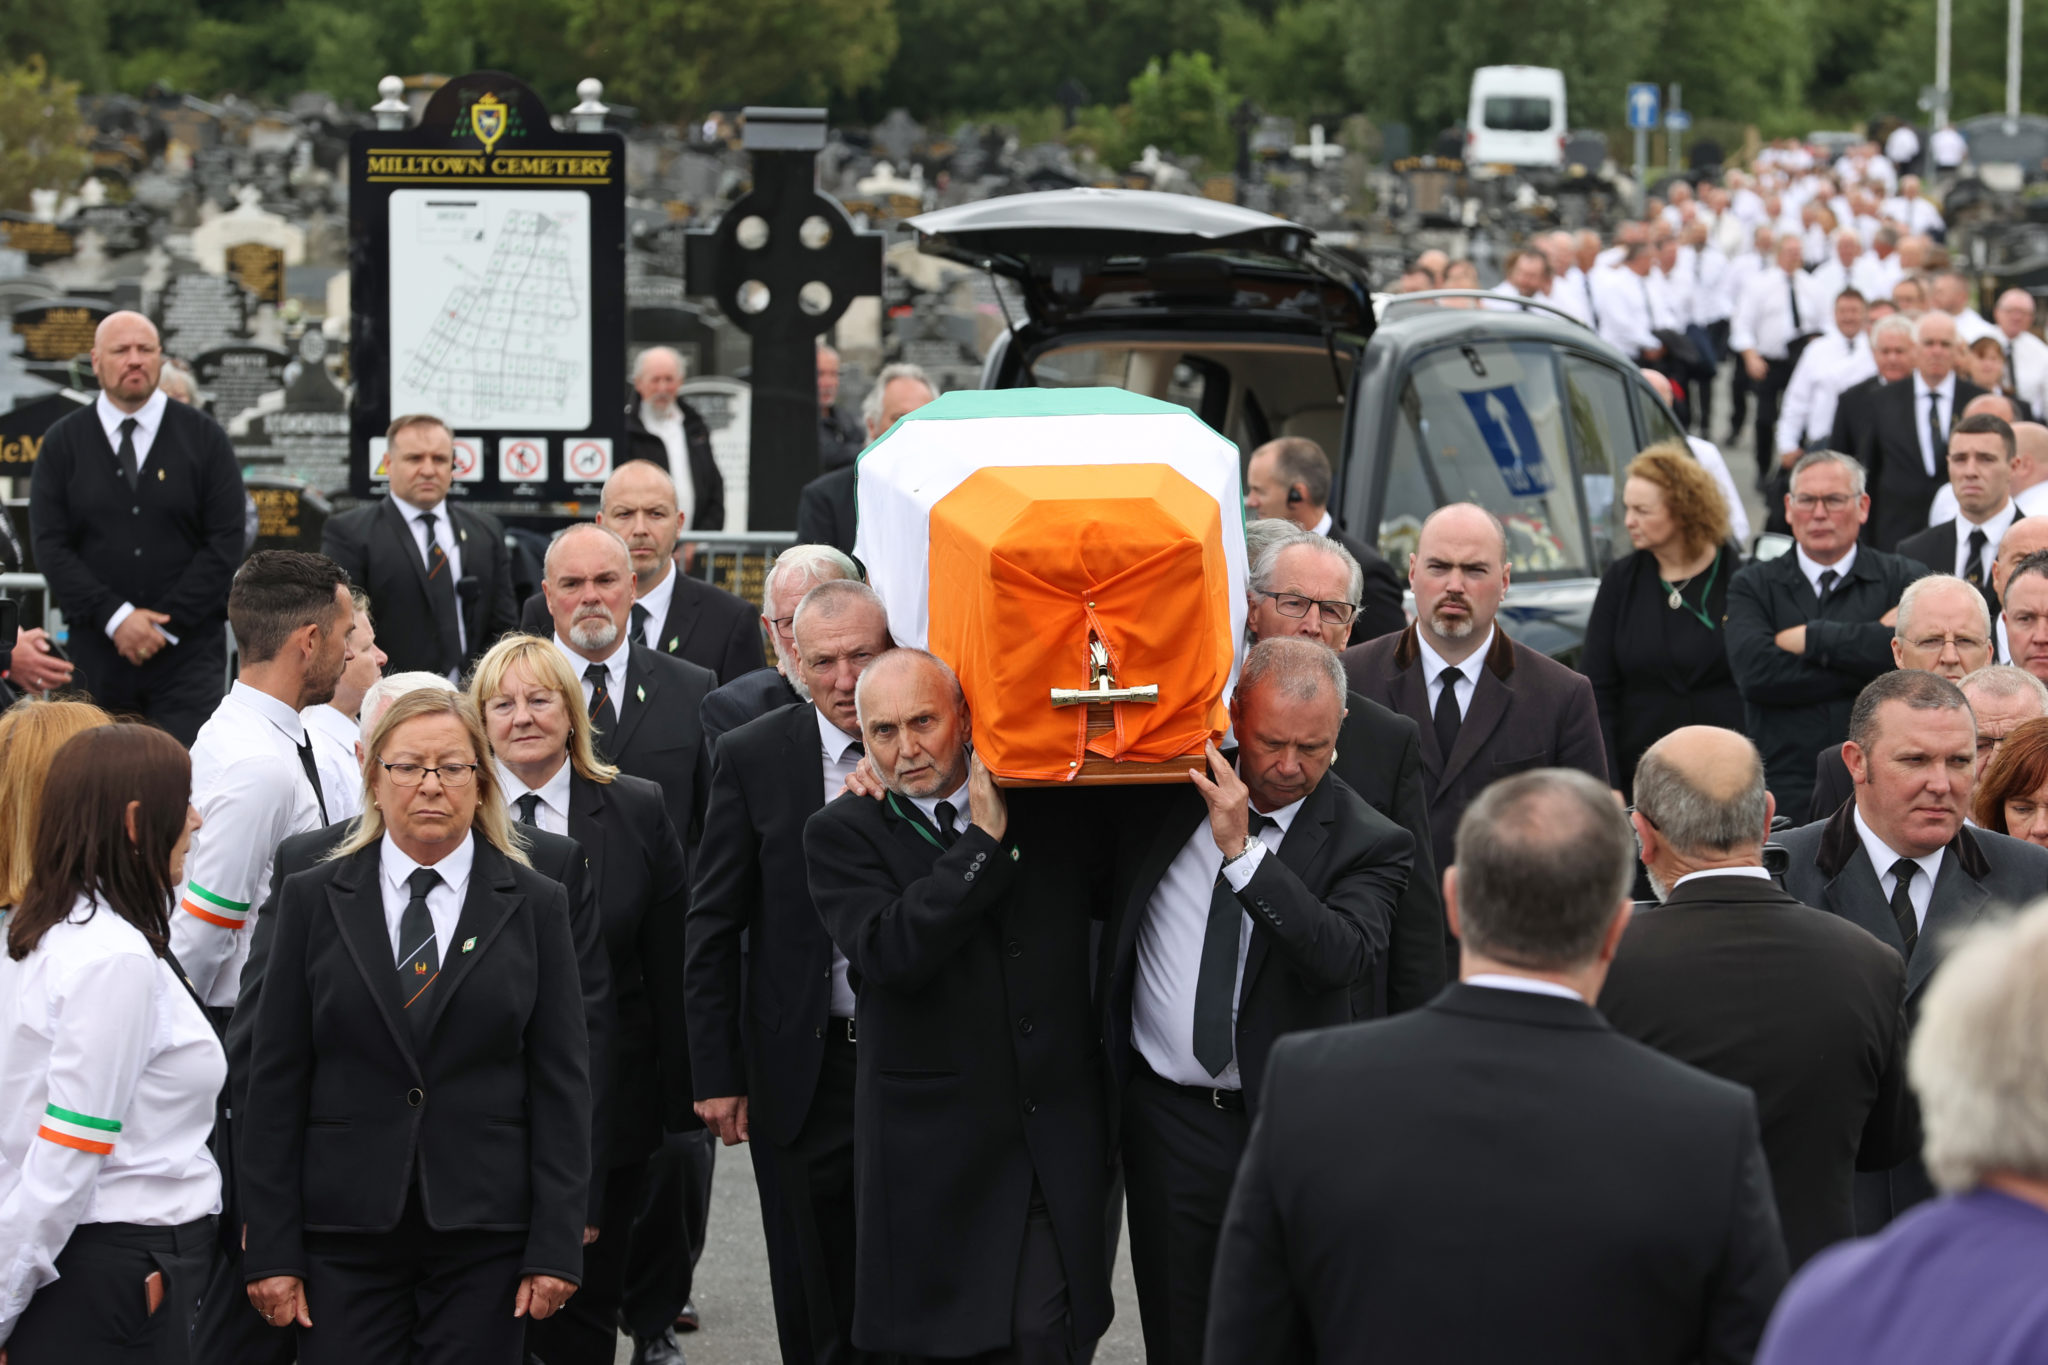 Bobby Storey funeral